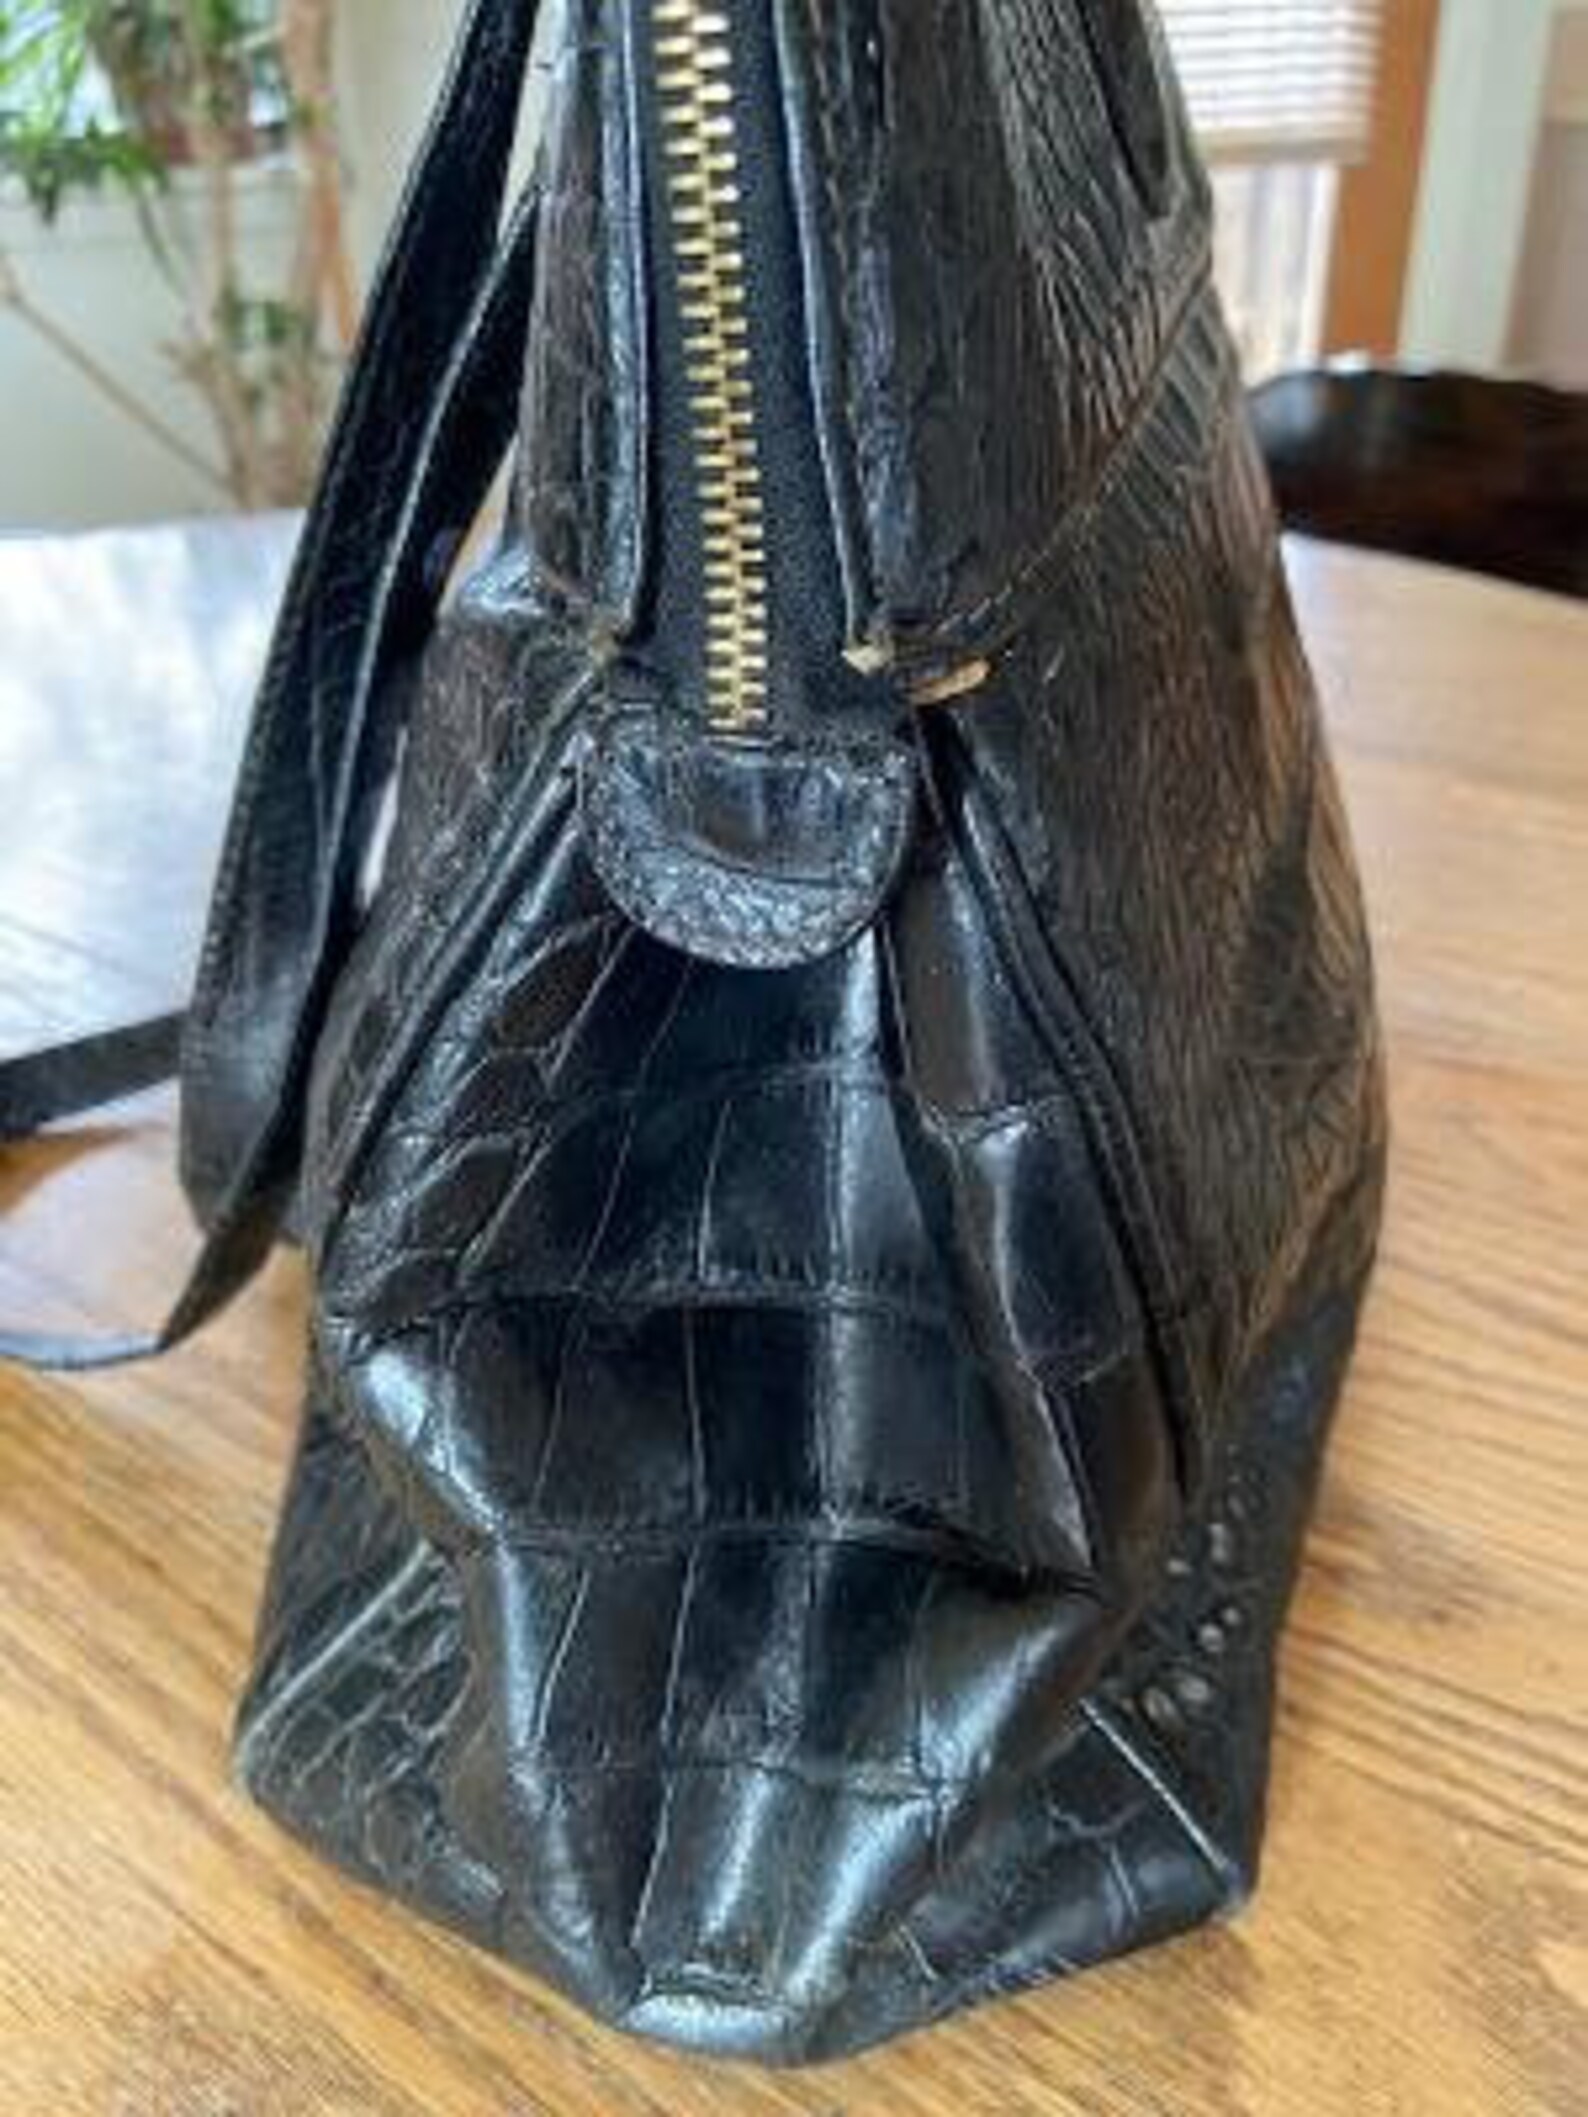 Vintage Cosci Leather Weekend Bag - Etsy.de